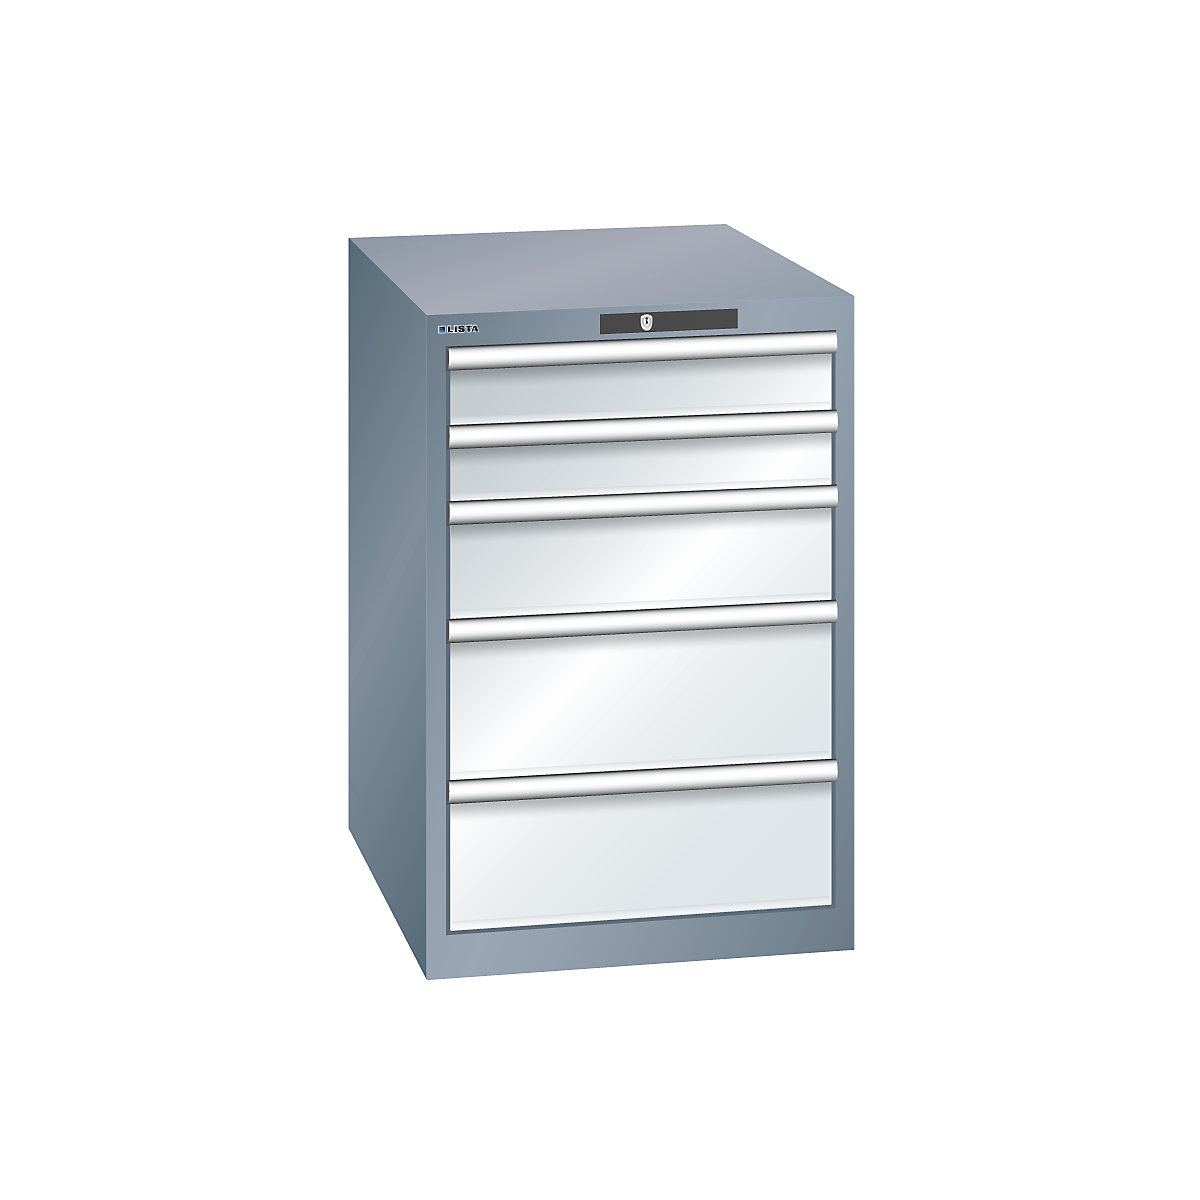 Armoire à tiroirs avec 5 tiroirs – LISTA, l x p x h 564 x 724 x 850 mm, gris métallisé / gris clair-2